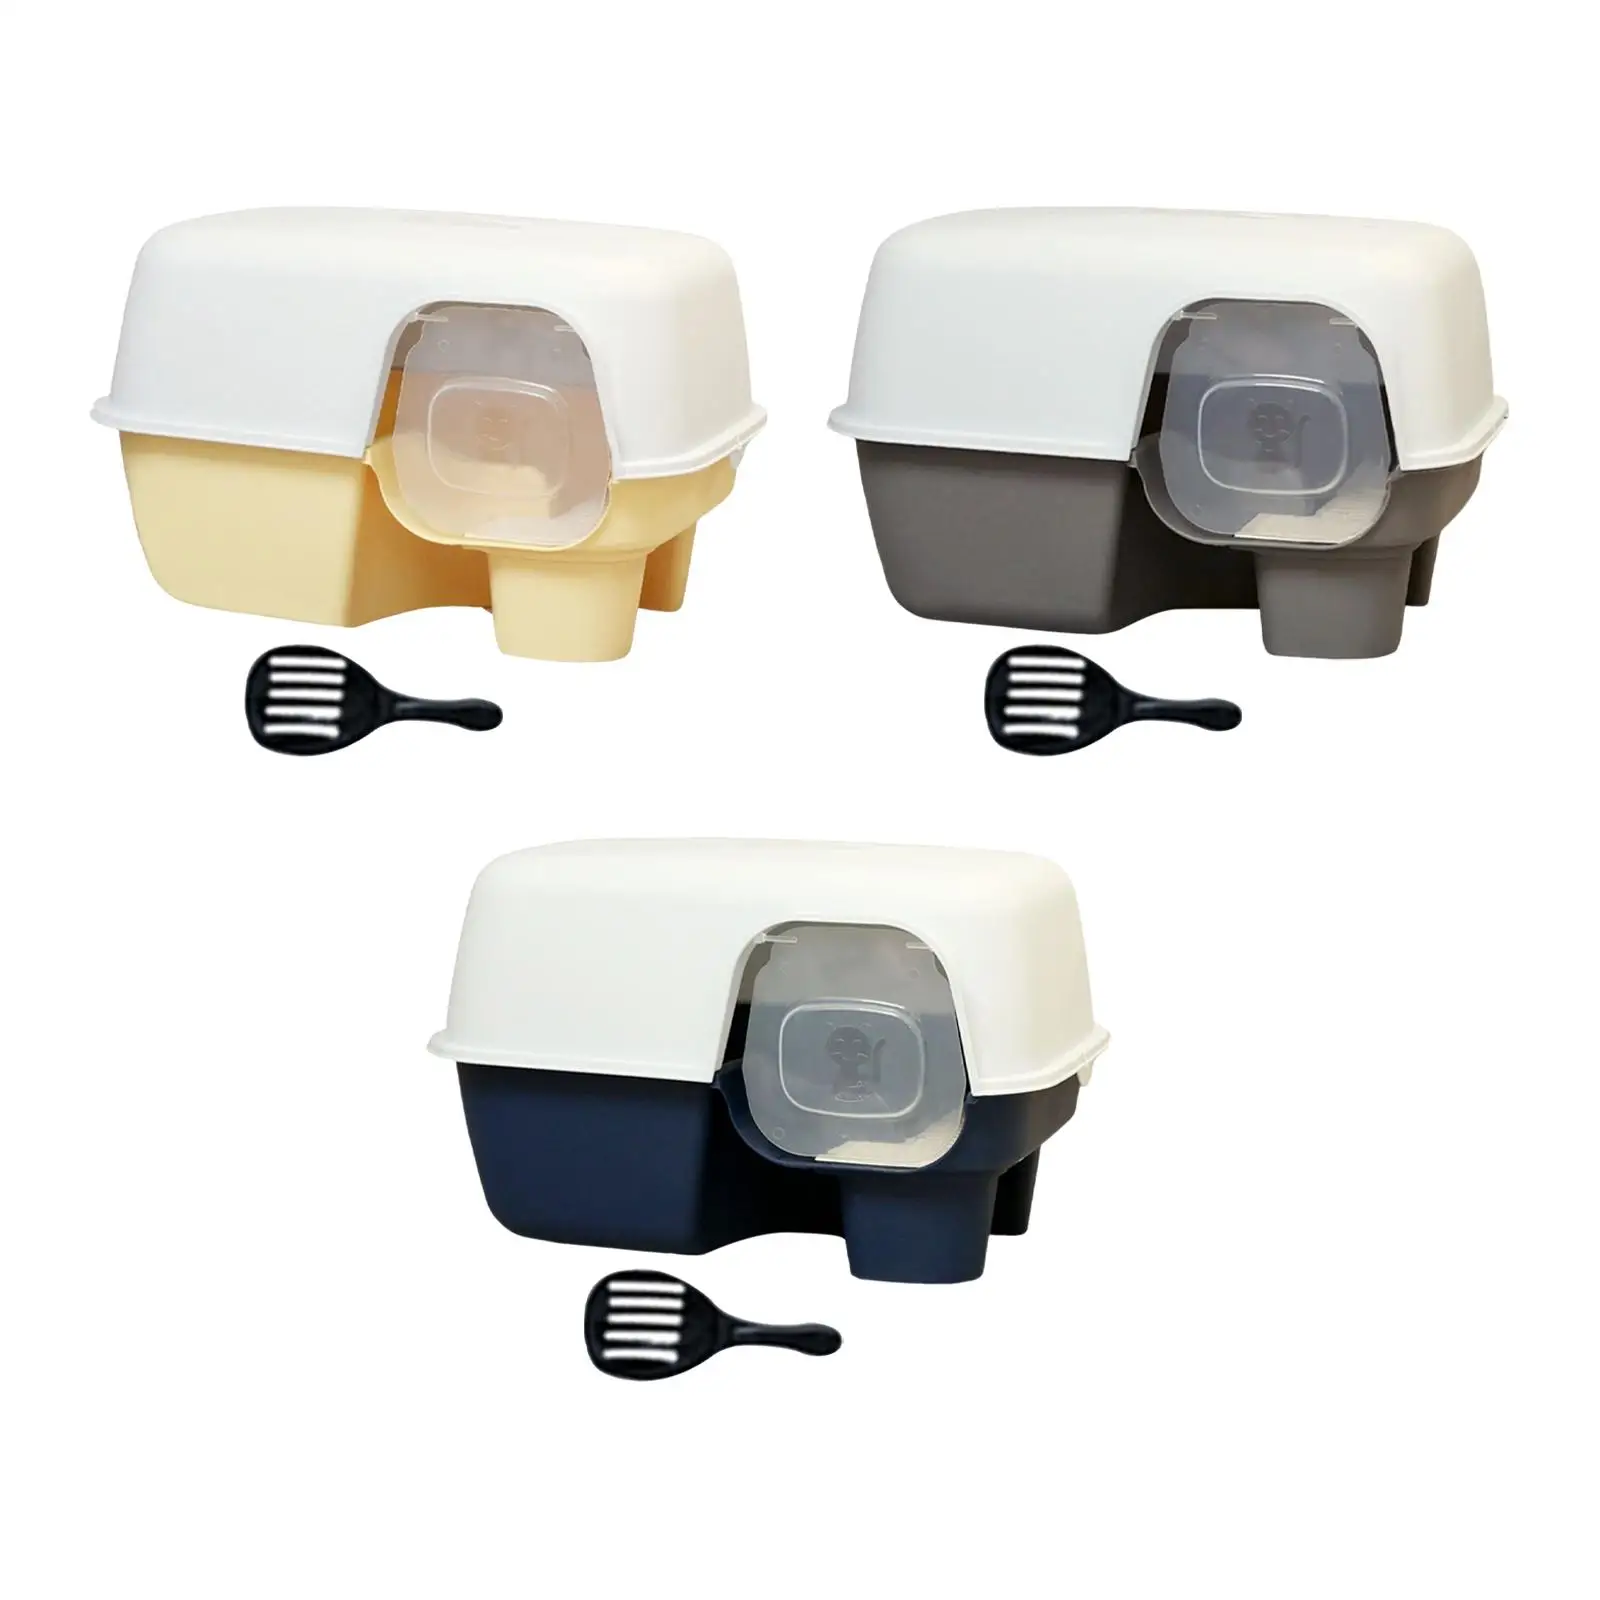 Large Enclosed Cat Litter Box Removeable Cat Bedpans High Side with Shovel Pet Supplies Portable Pet Litter Tray Cat Toilet